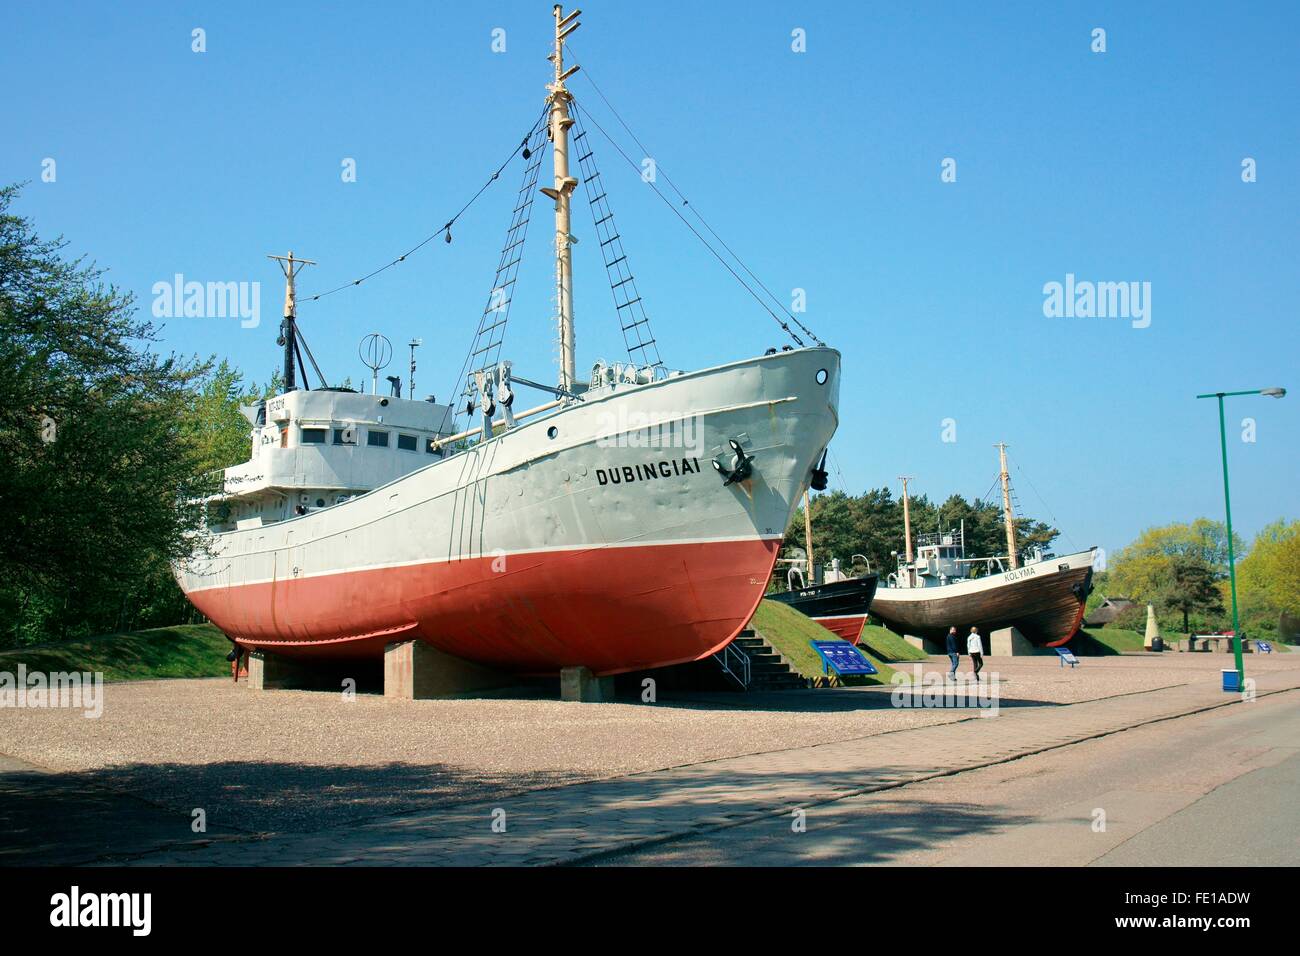 Klaipeda Lithuania. Atlantic trawler Dubingiai built in Klaipeda 1961 now part of the Lithuanian Maritime Museum at Klaipeda Stock Photo